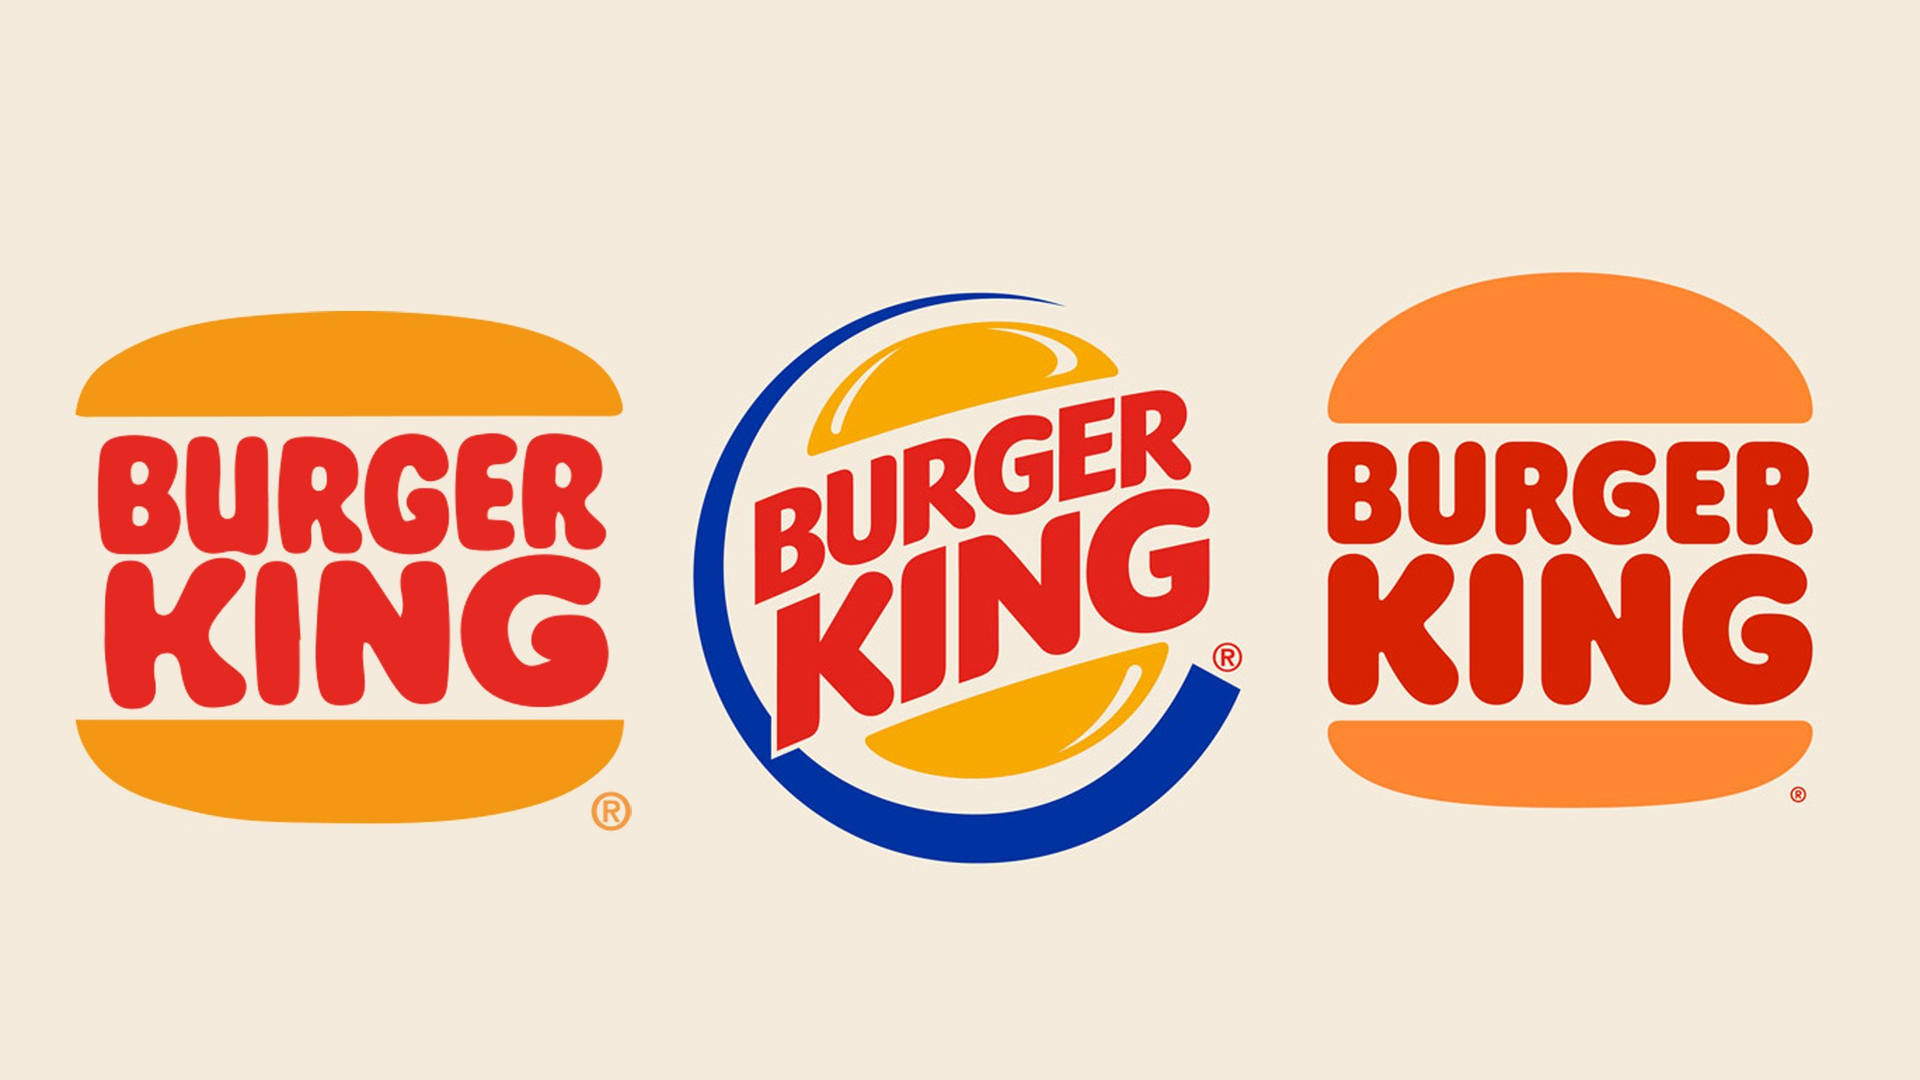 Zartesburger King Logo Wallpaper